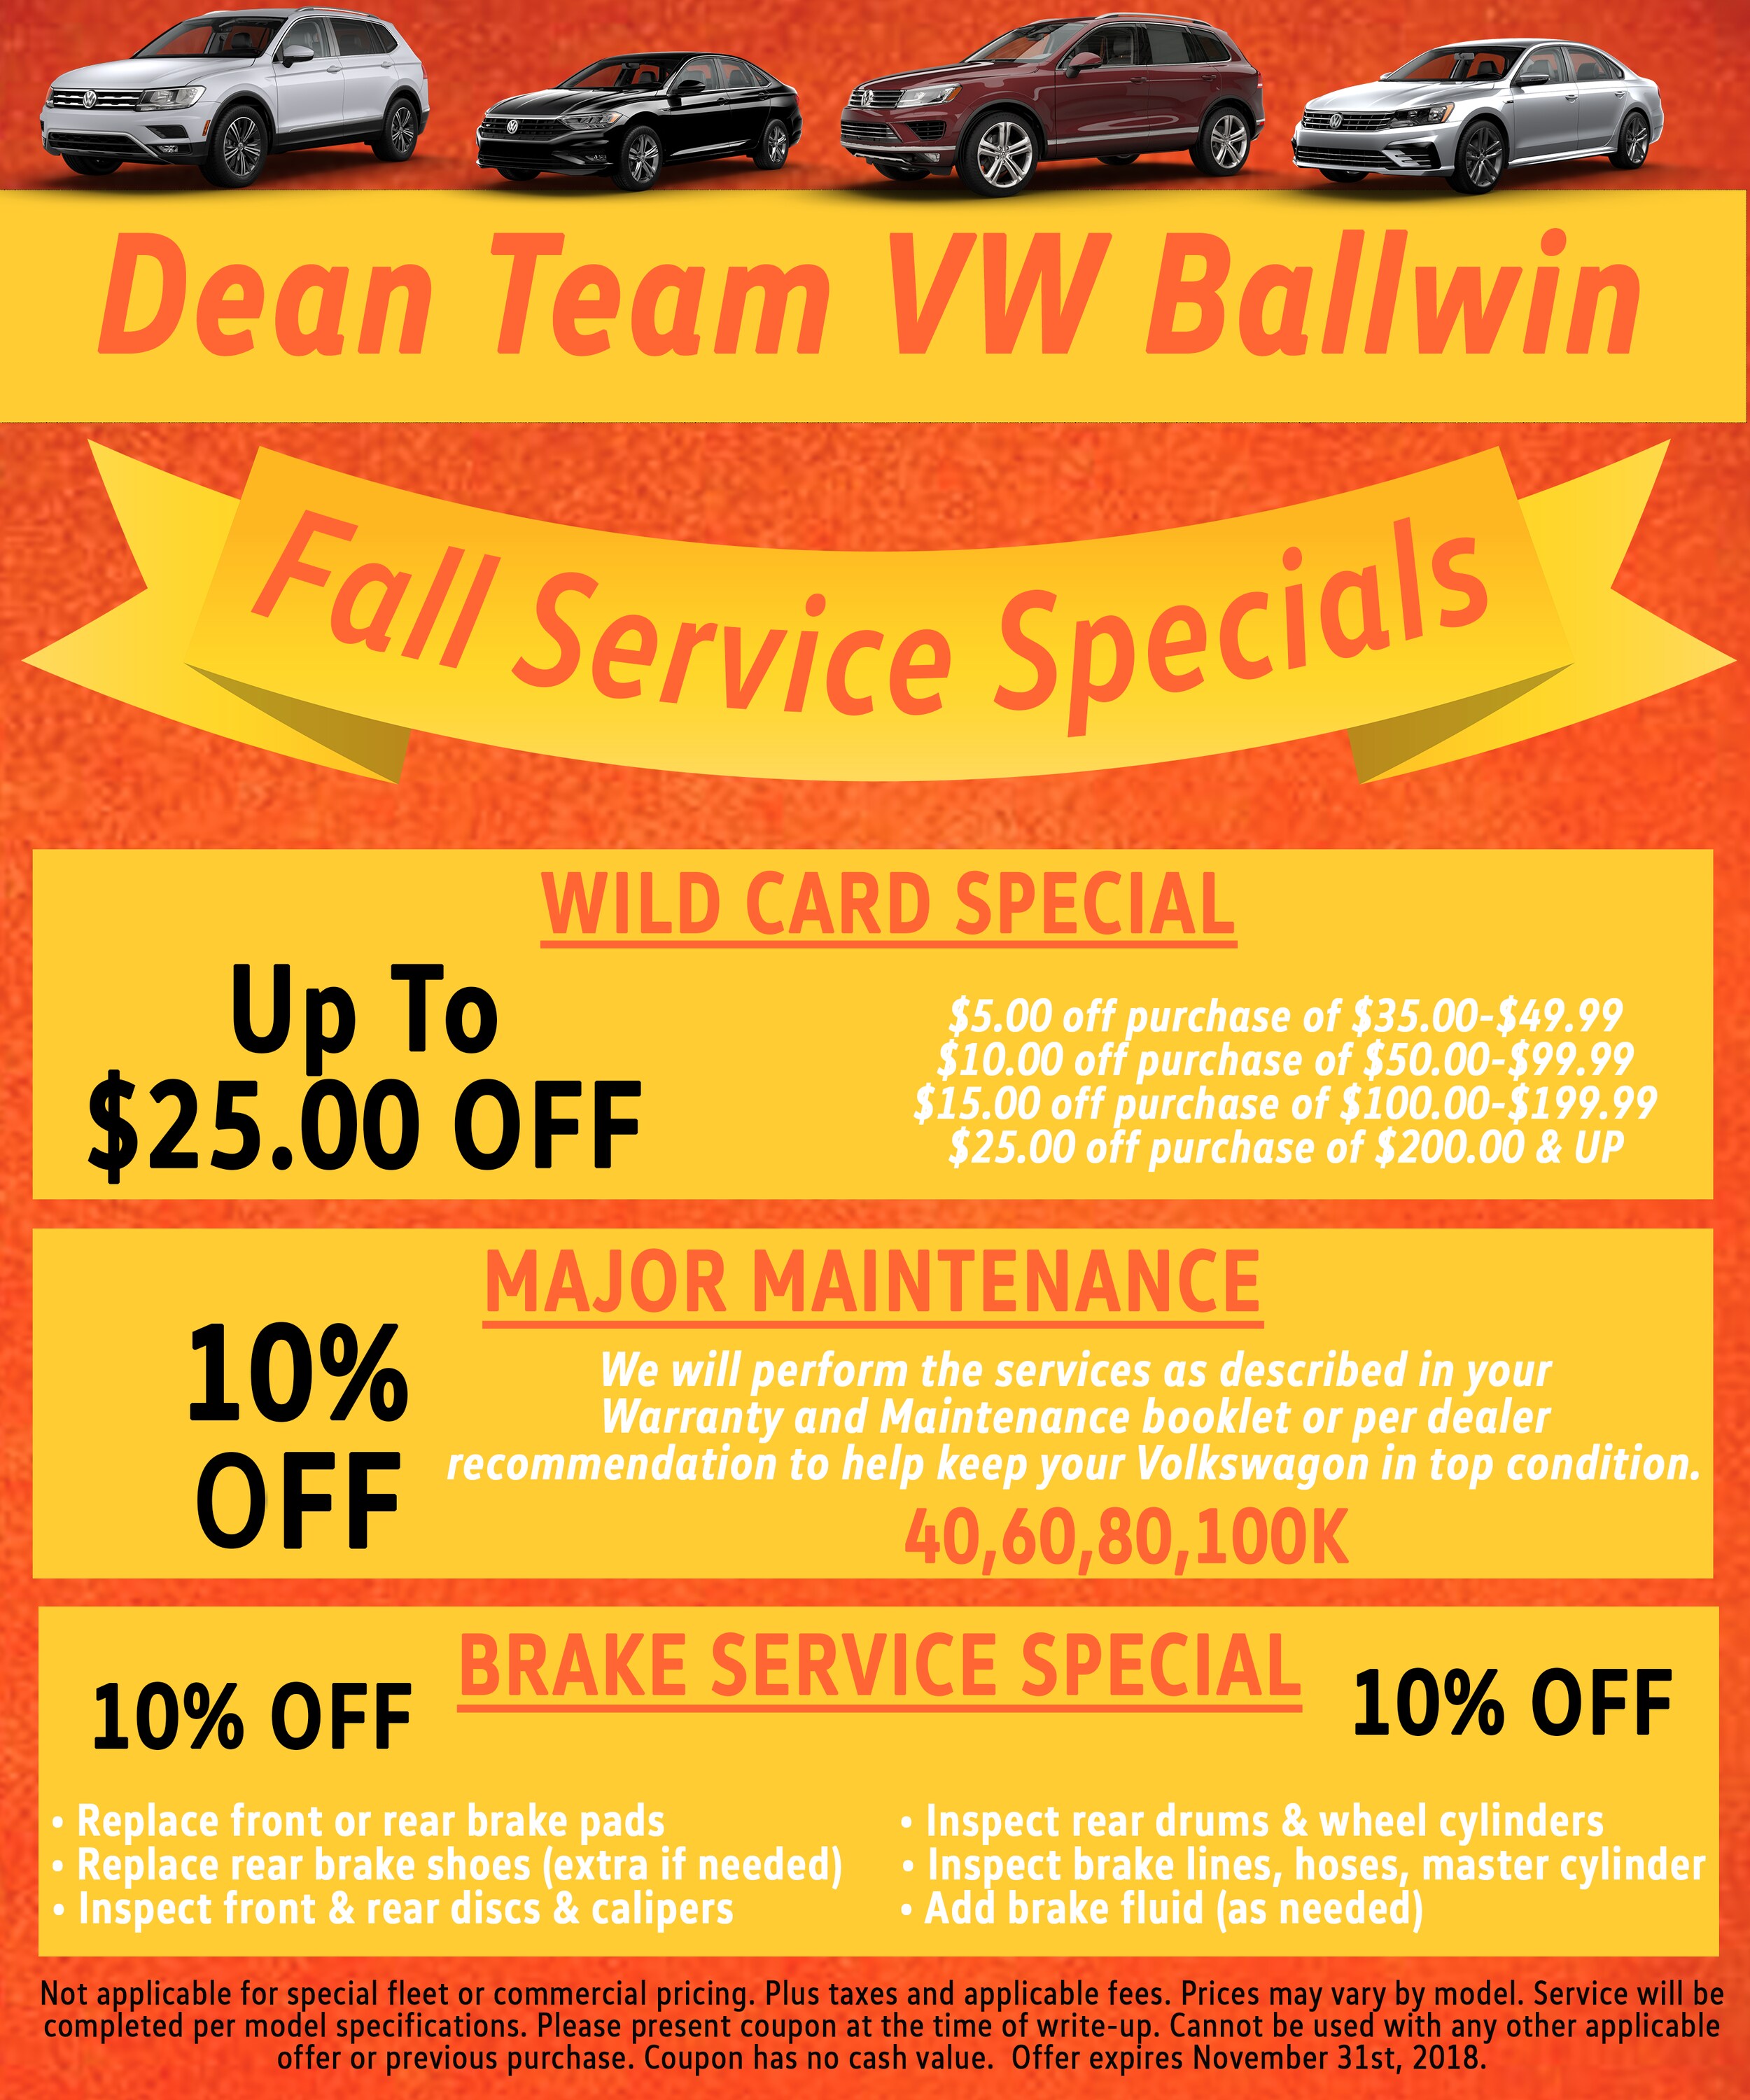 Volkswagen Service Coupons | Dean Team Volkswagen of Ballwin Service Center in St. Louis, MO